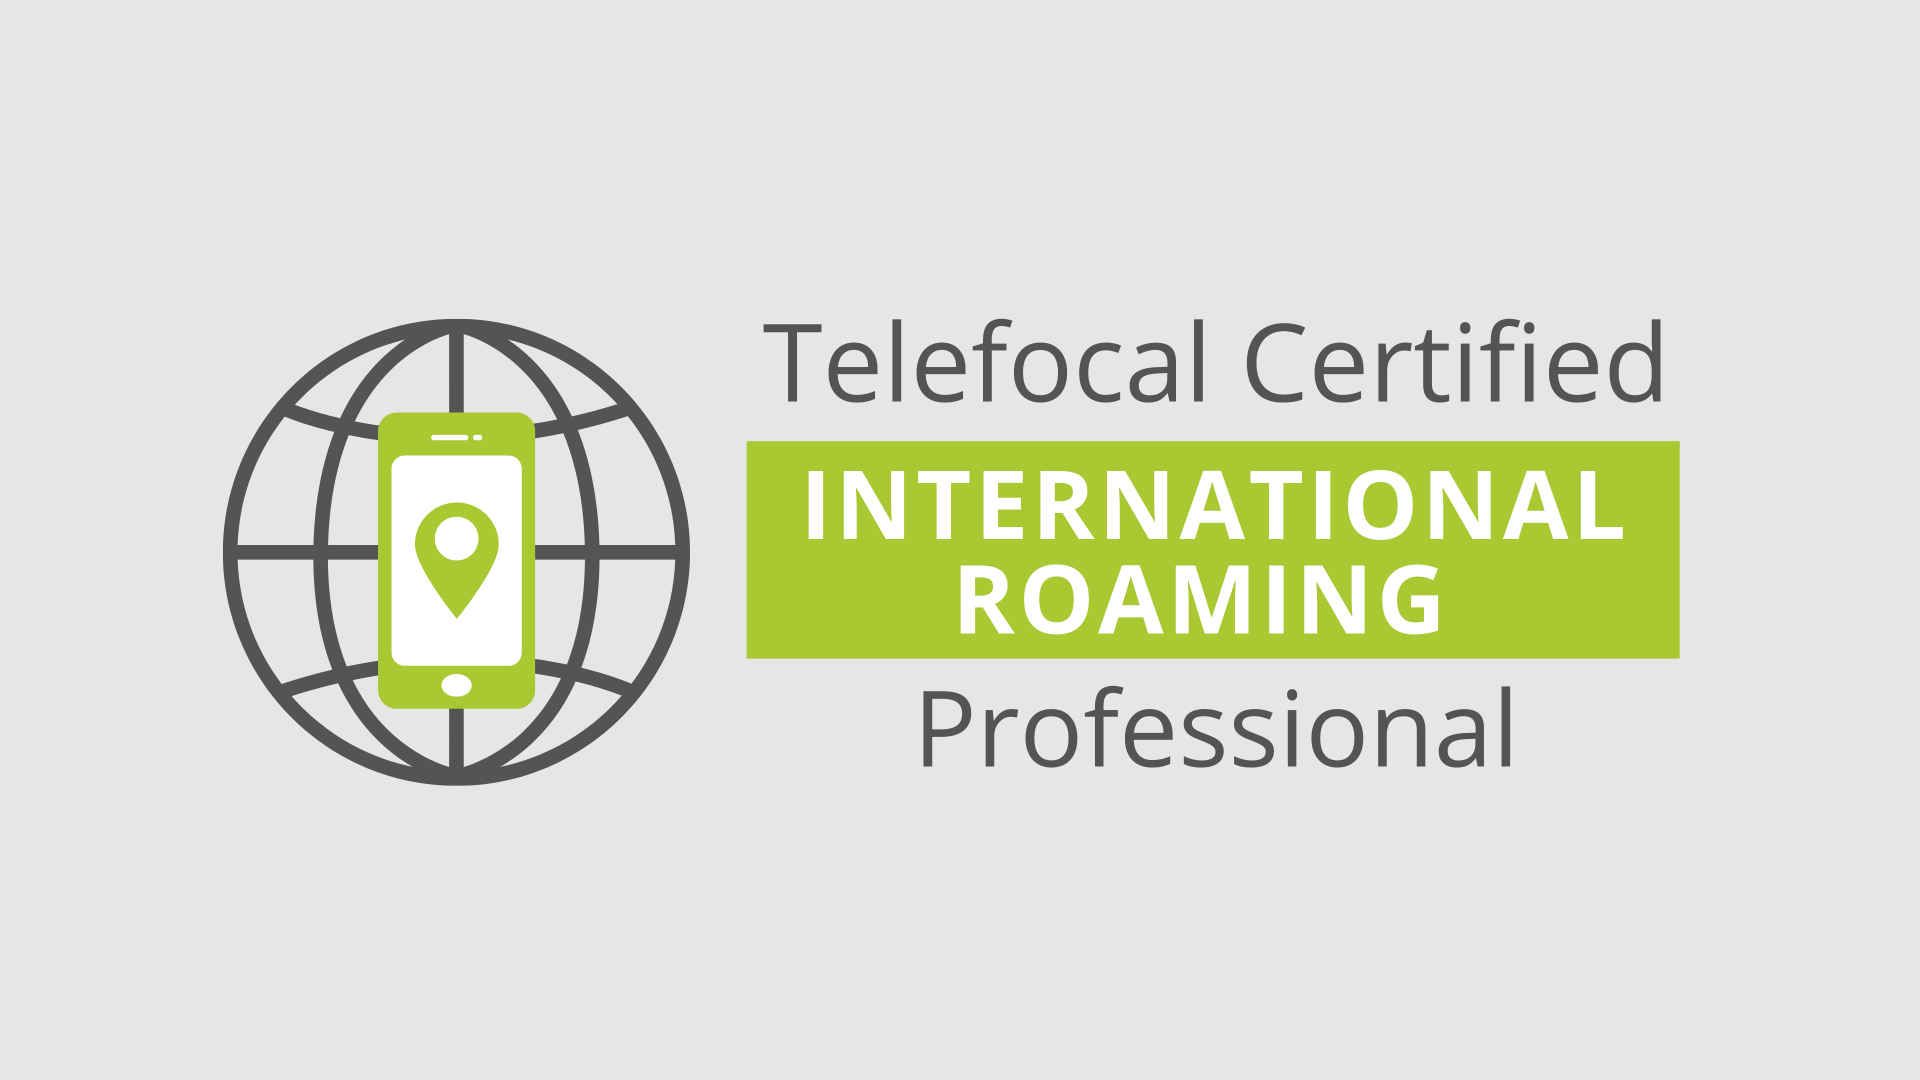 Telefocal Certified International Roaming Professional